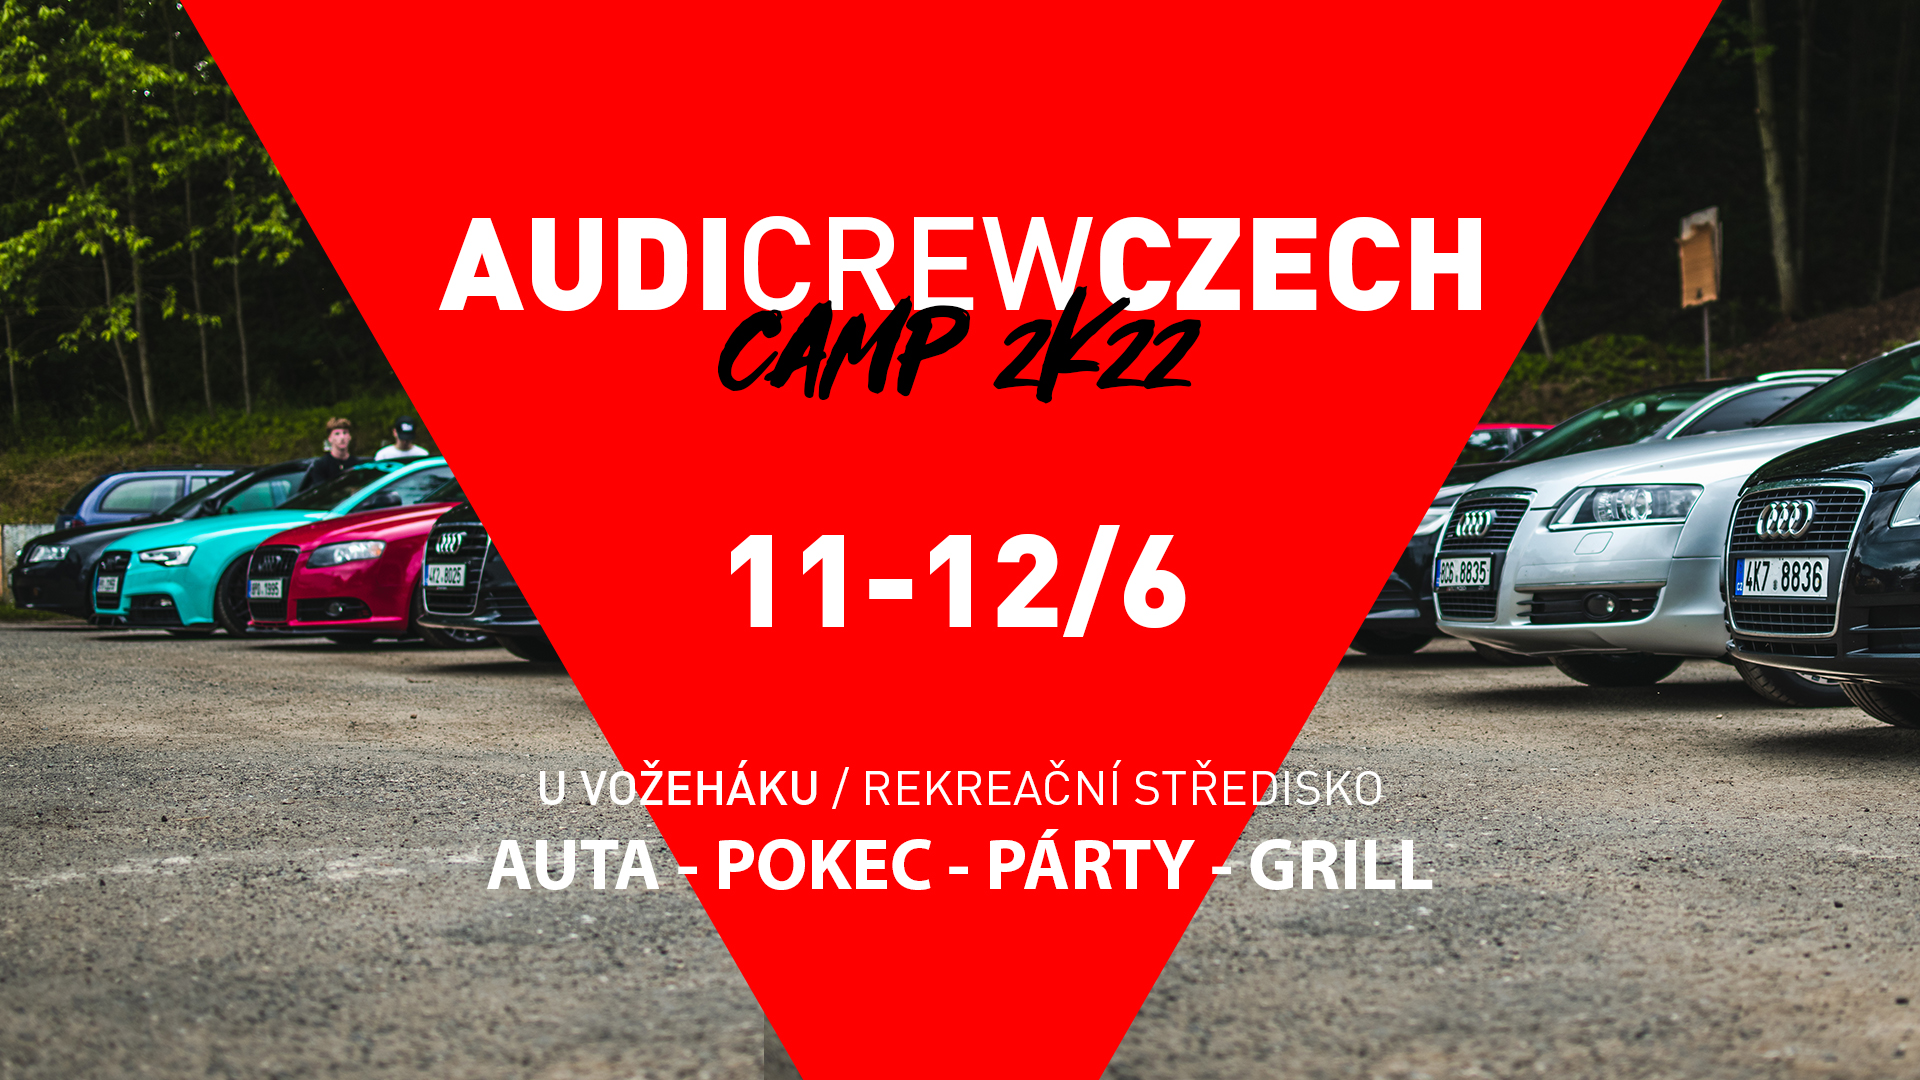 Audi Crew Camp 2k22 vol.2